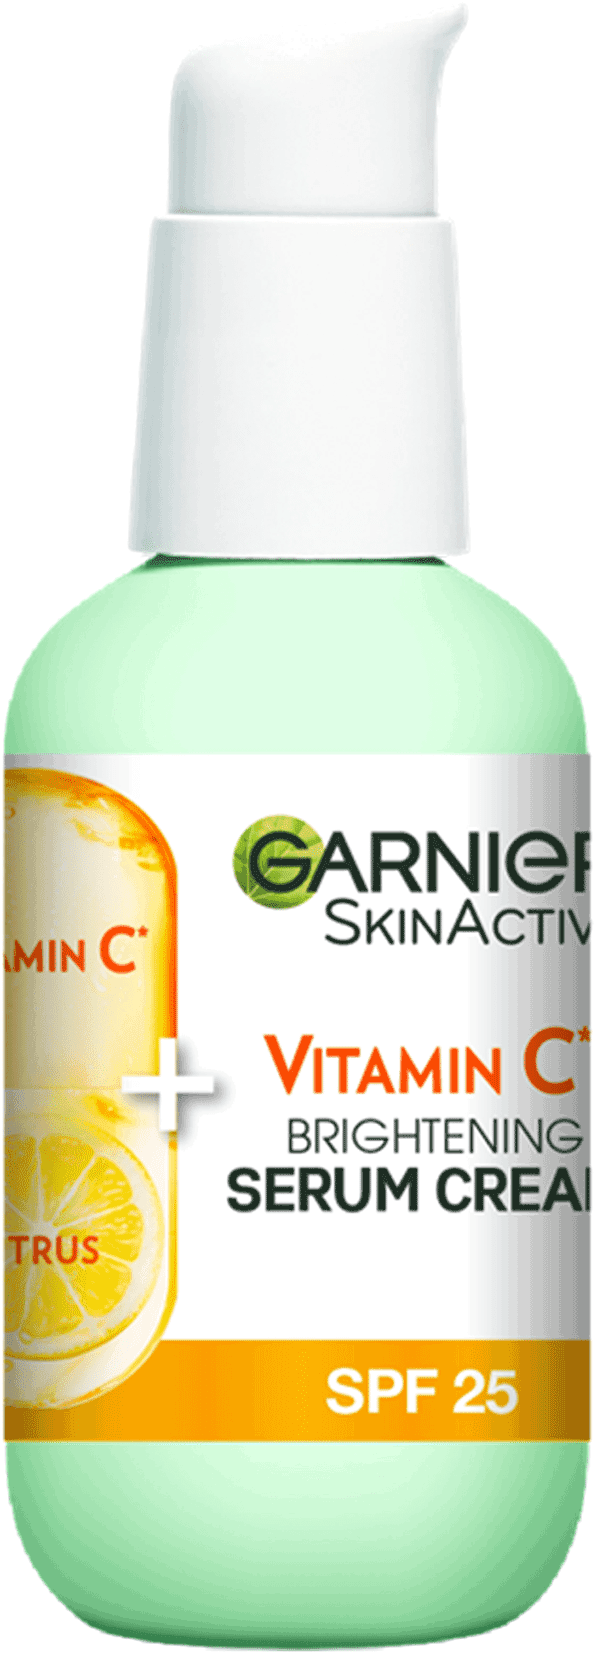 Garnier Skinactive Vitamin C Brightening Serum Cream With SPF 25